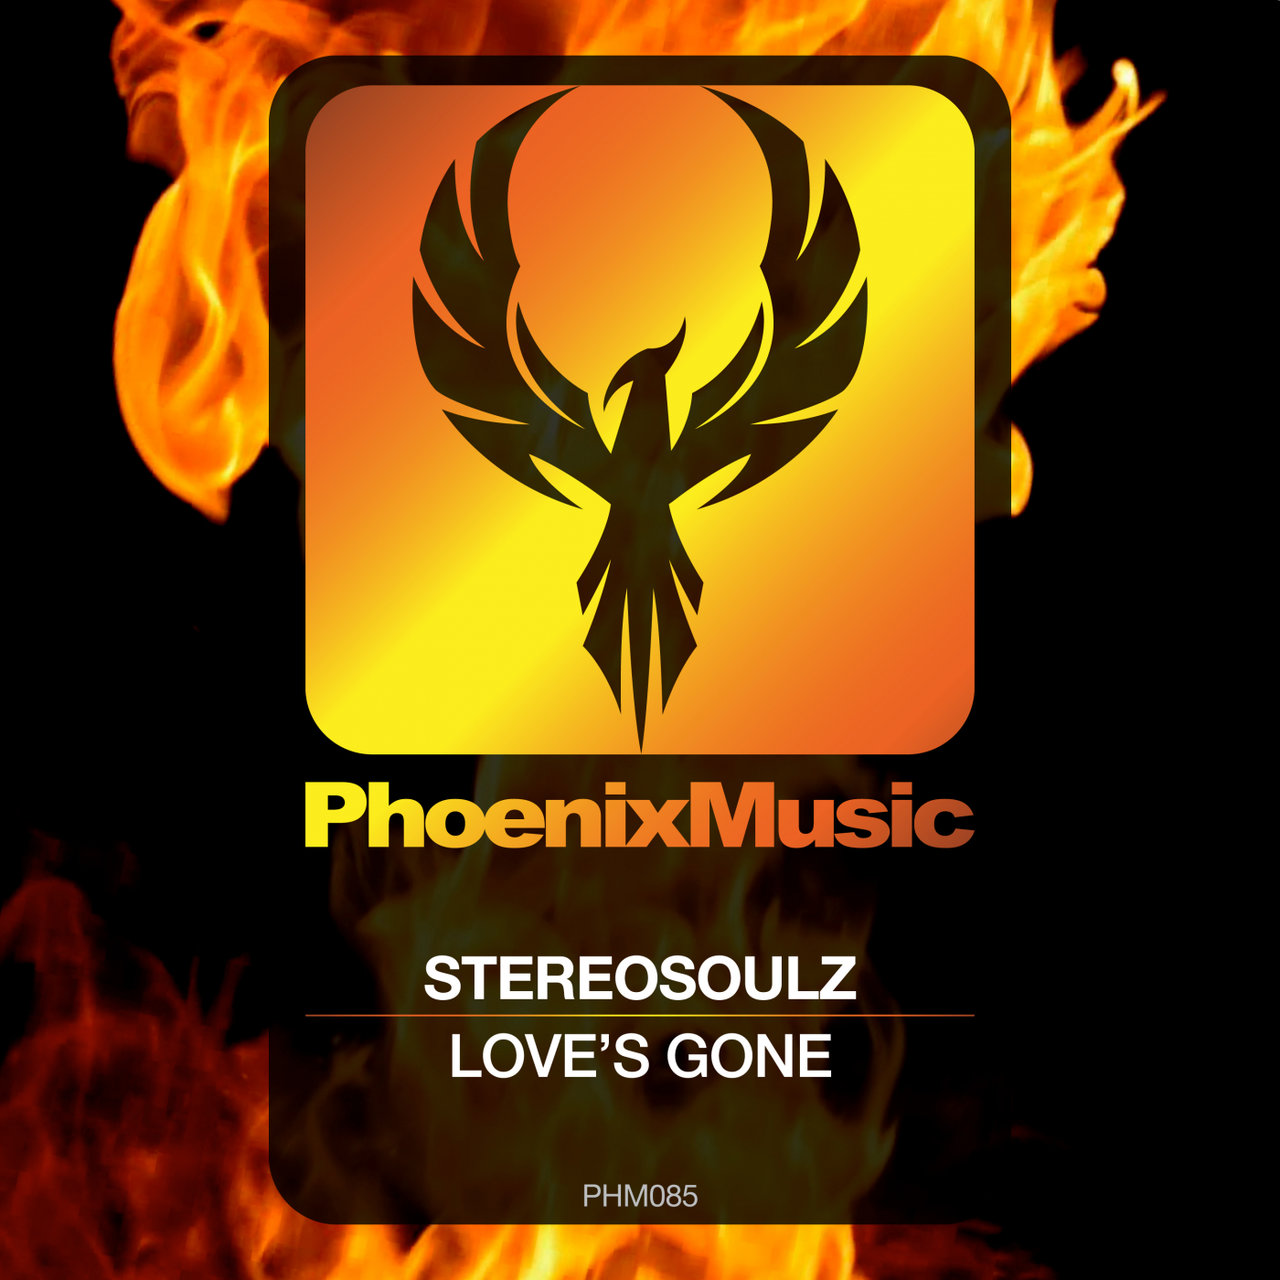 Stereosoulz - Love's Gone / Phoenix Music